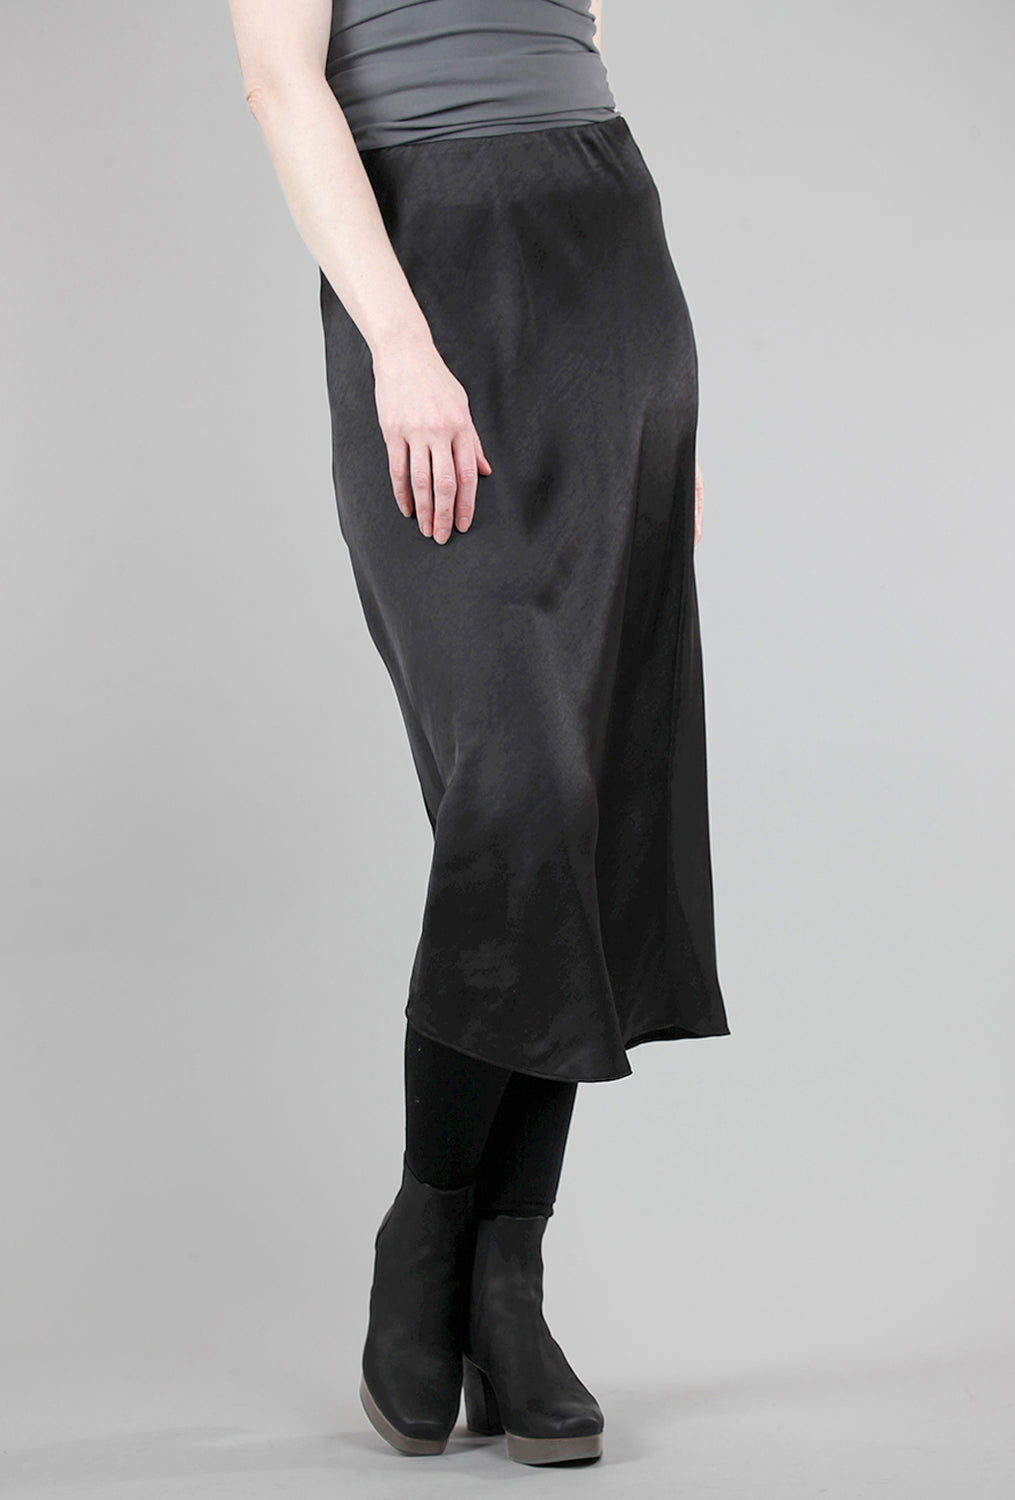 Lilla P Bias-Cut Sateen Skirt, Black 